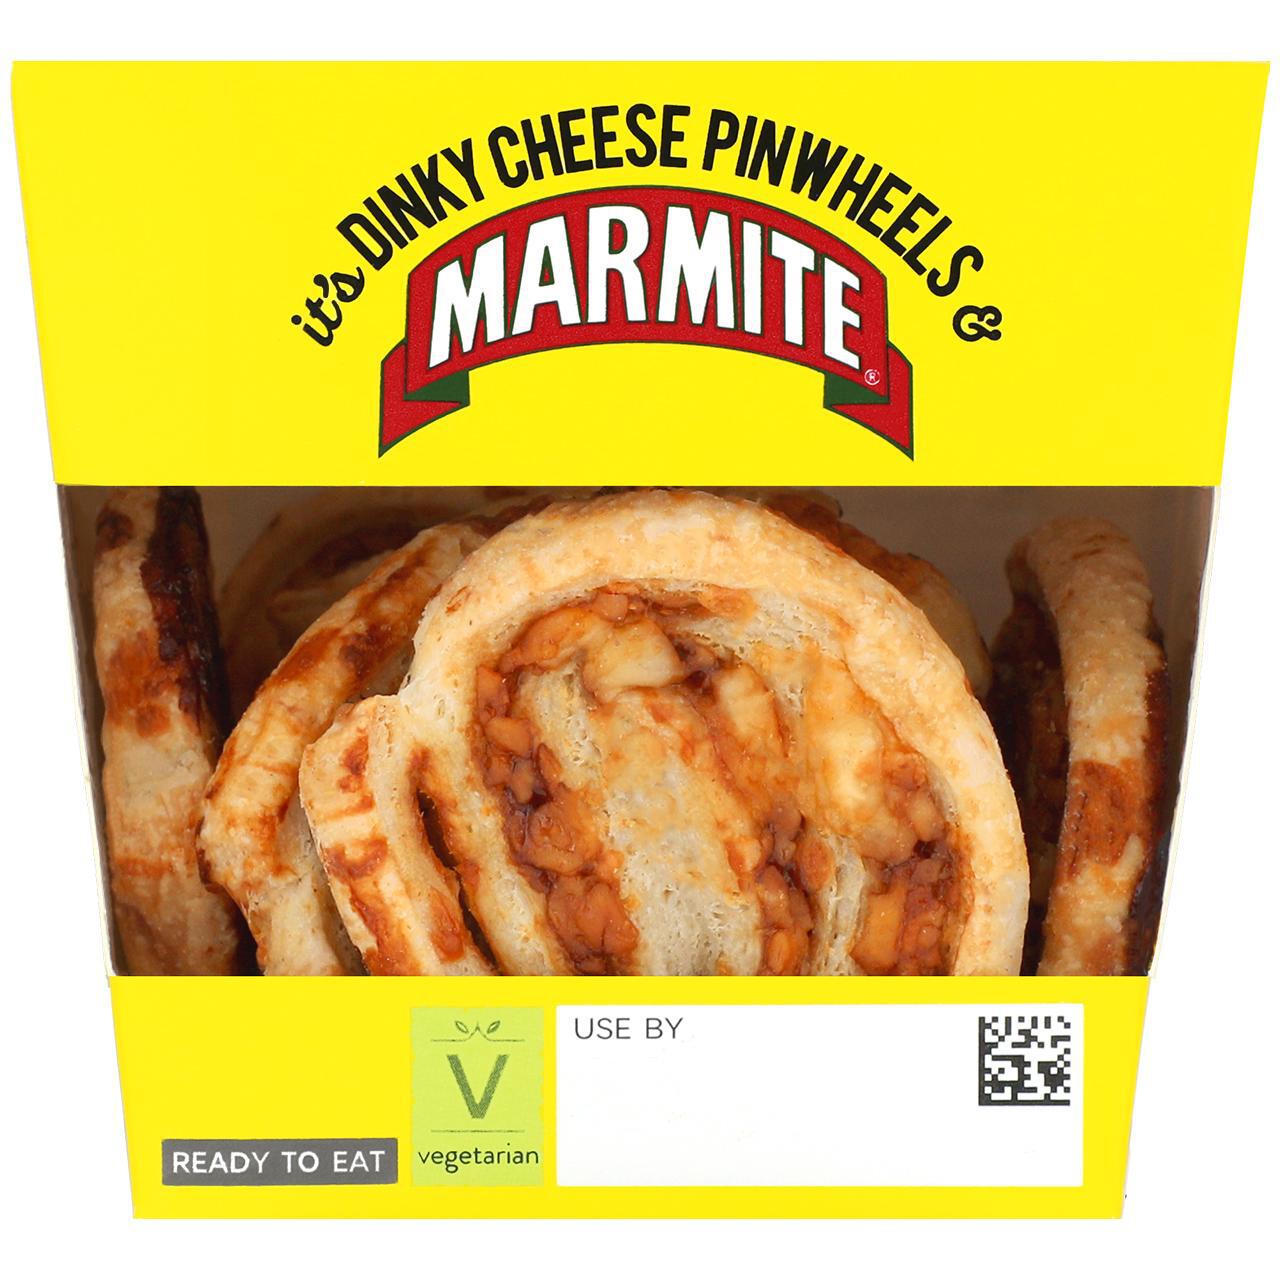 M&S 8 Marmite Dinky Cheese Pinwheels 88g